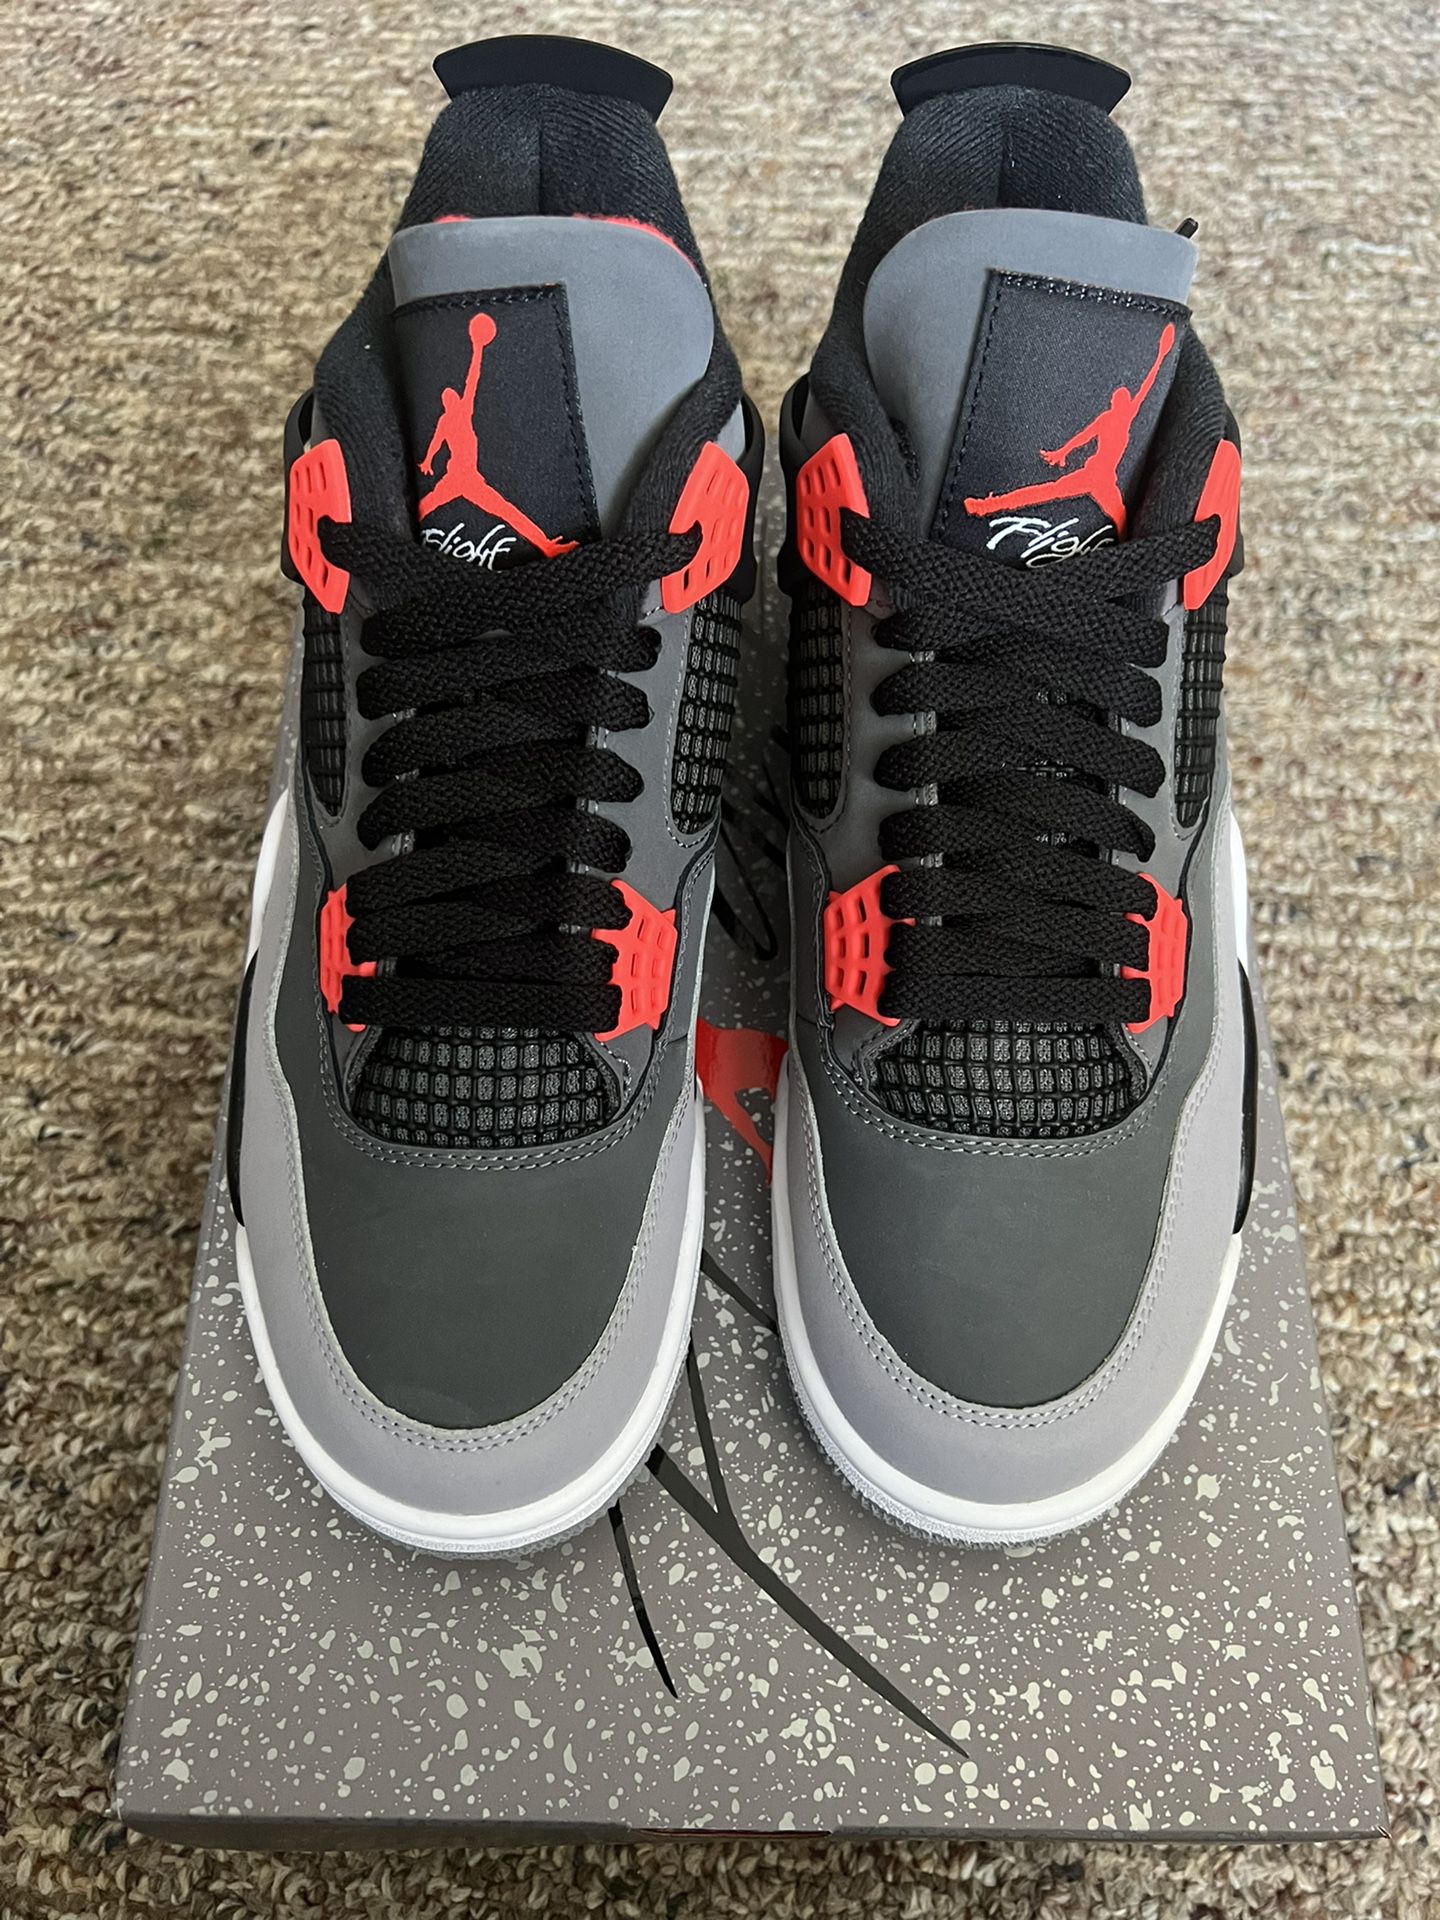 Air Jordan Retro 4 Infrared Size 8 BRAND NEW